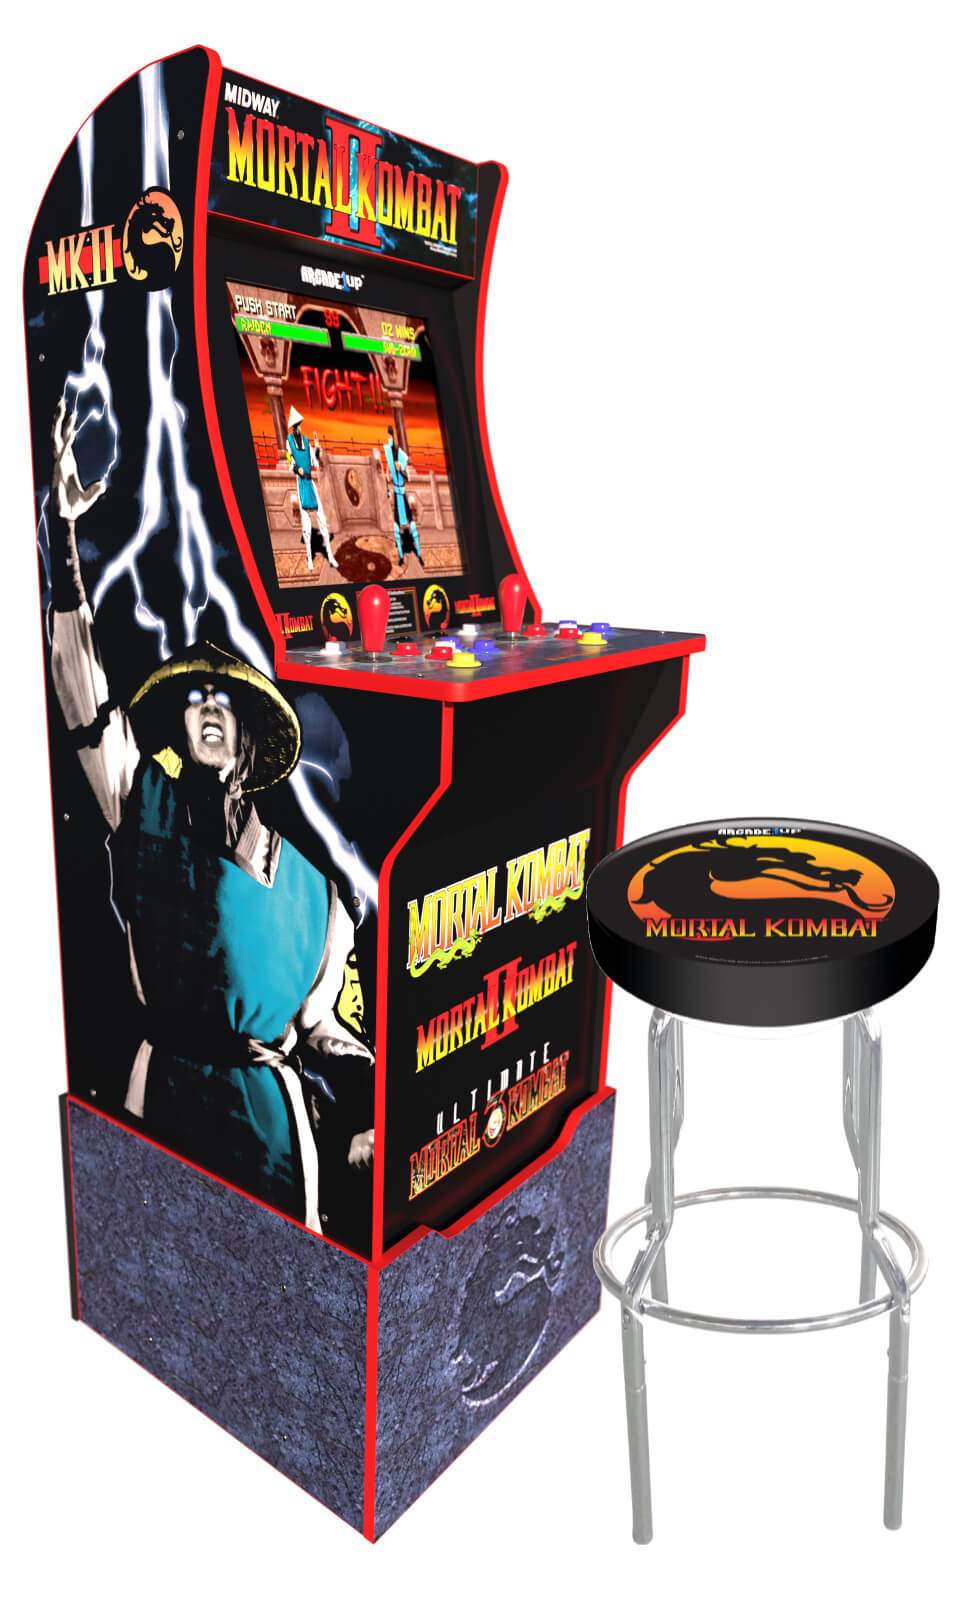 Mortal Kombat Arcade1UP Gaming Cabinet 4ft Includes Mortal Kombat I,II, III 